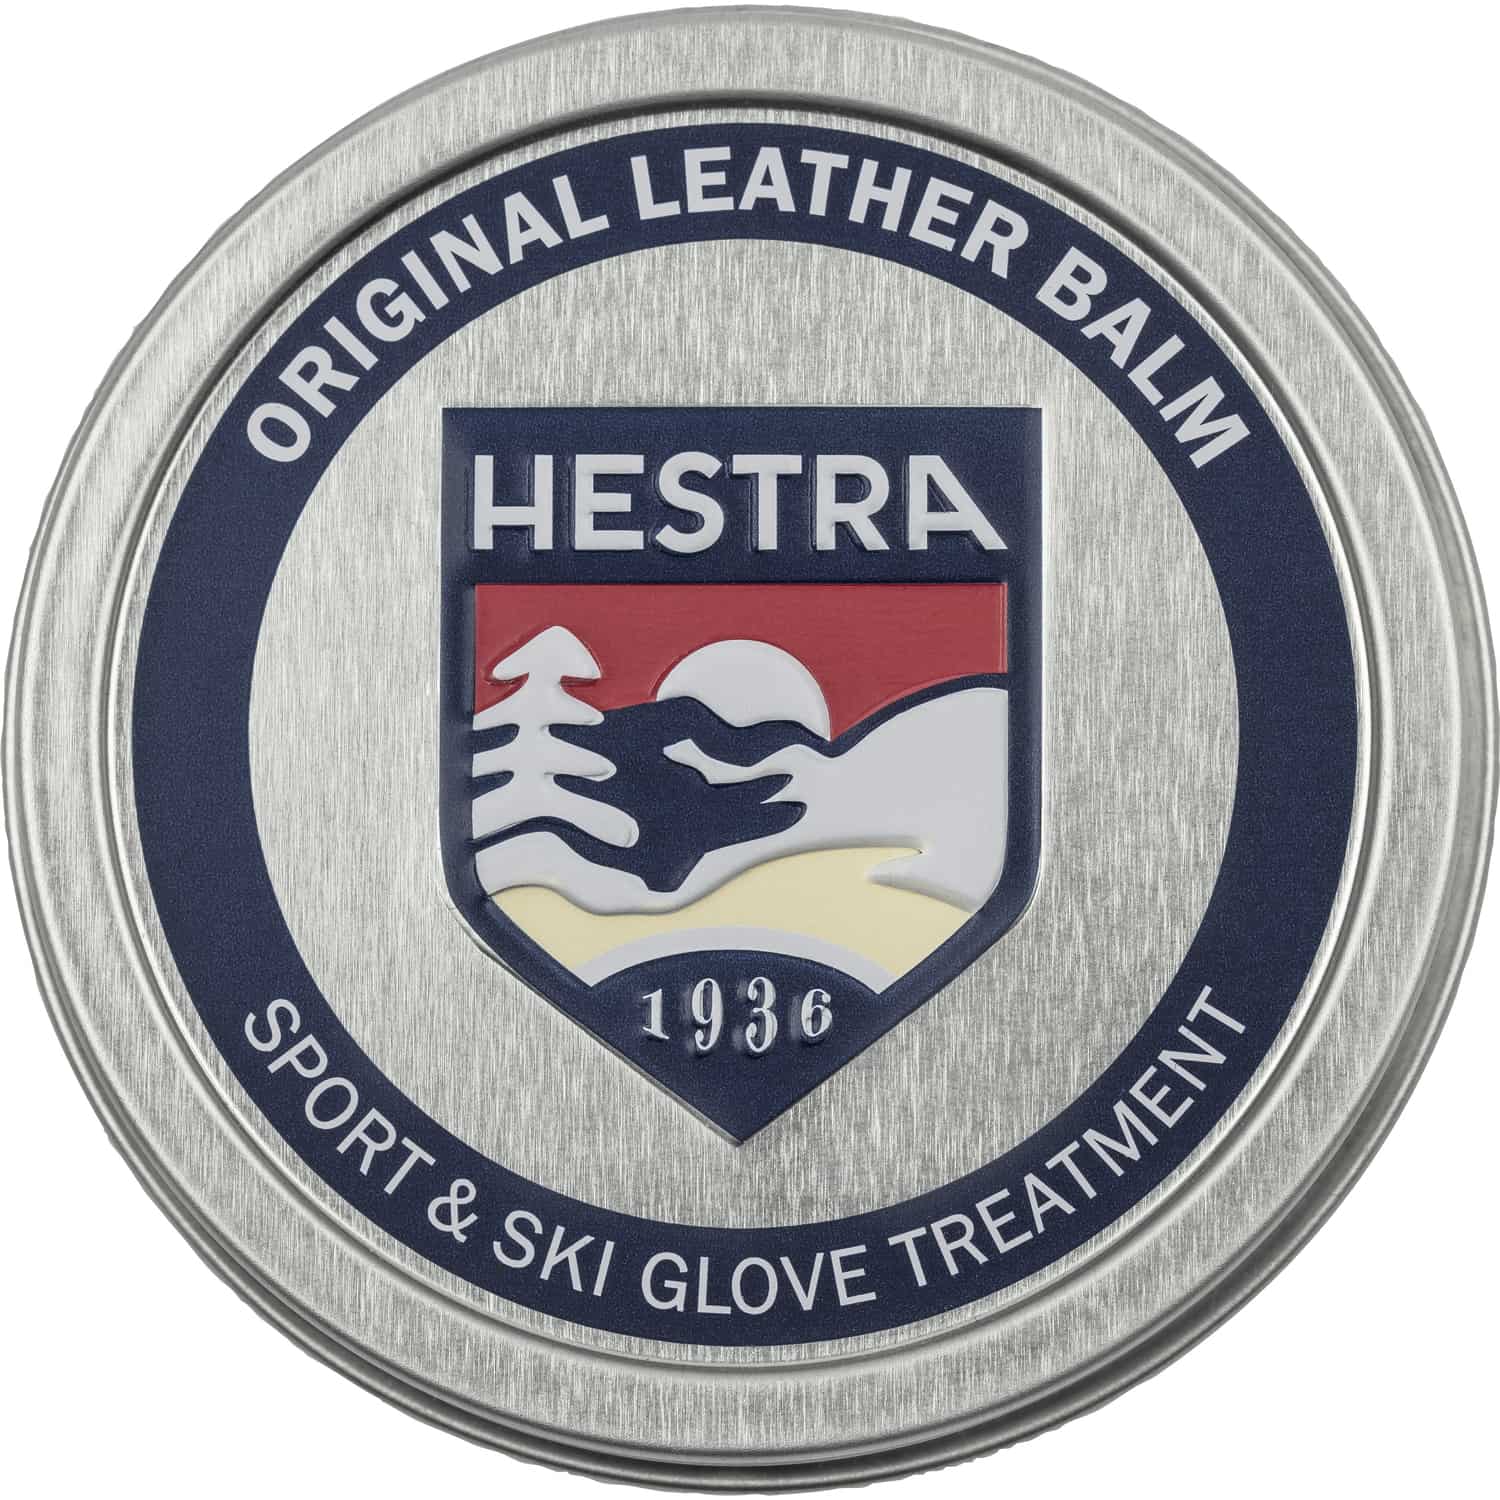 Hestra "Leather Balm"